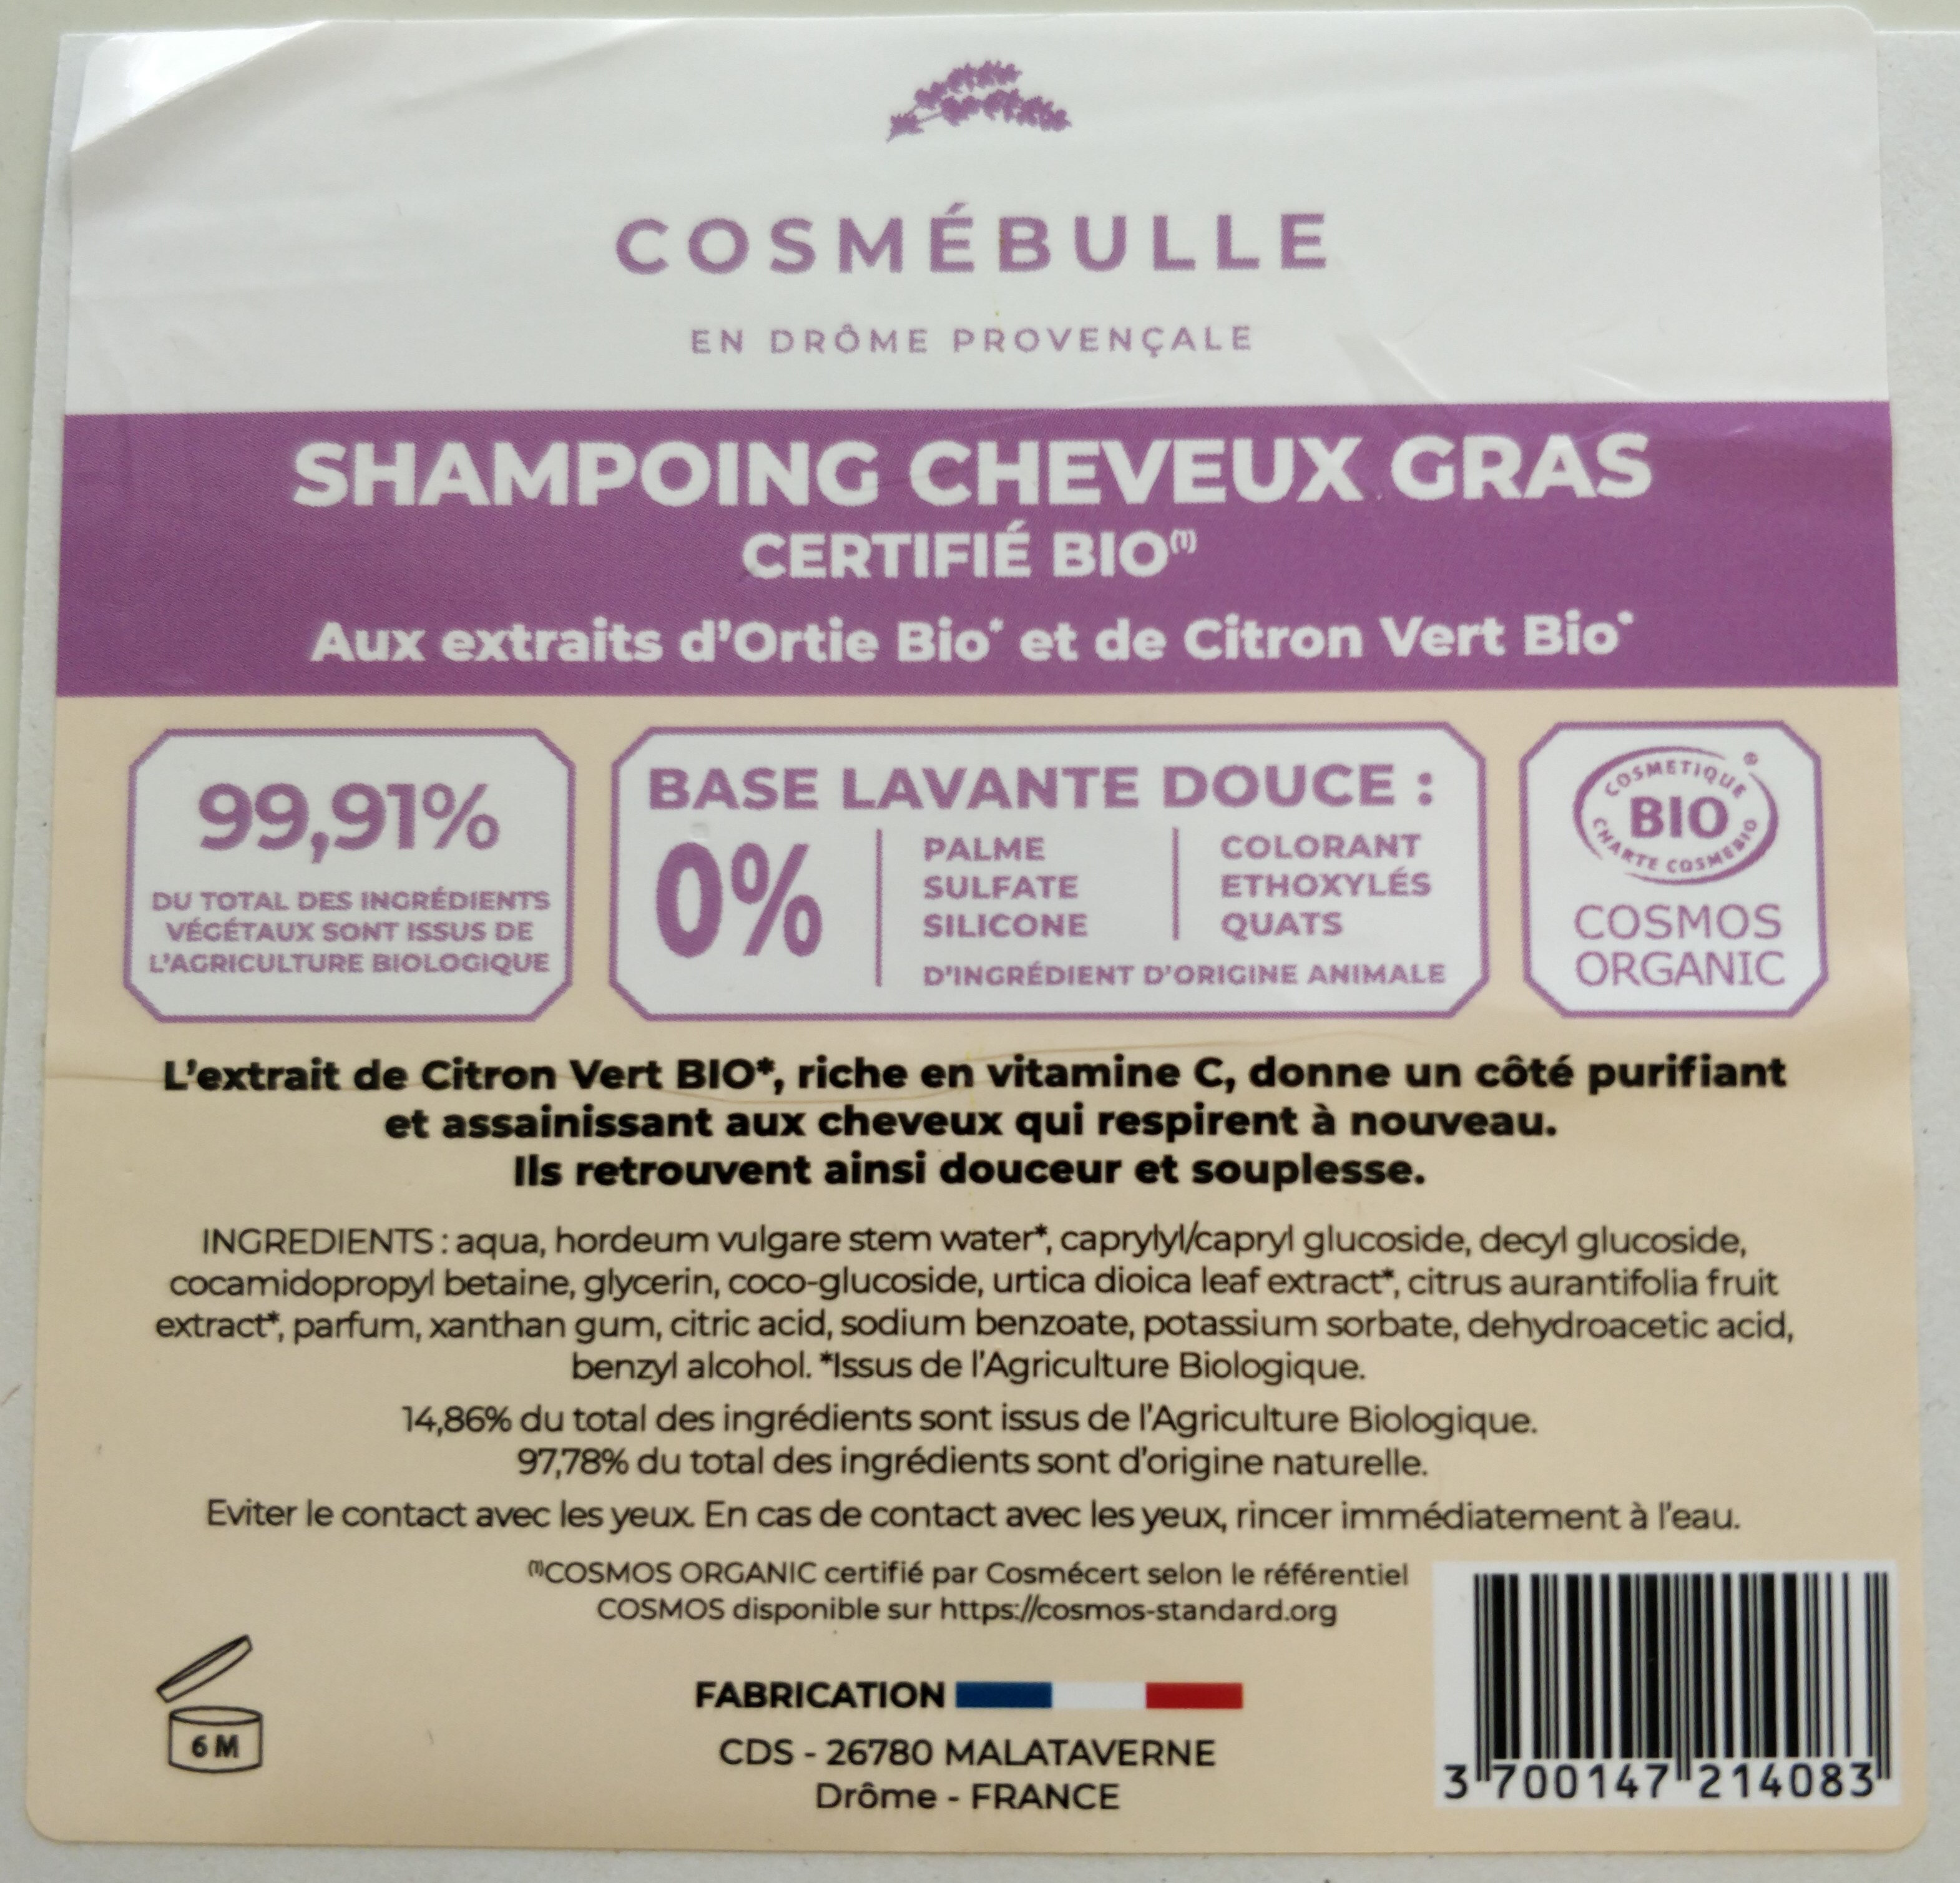 Shampoing cheveux gras - Produit - fr